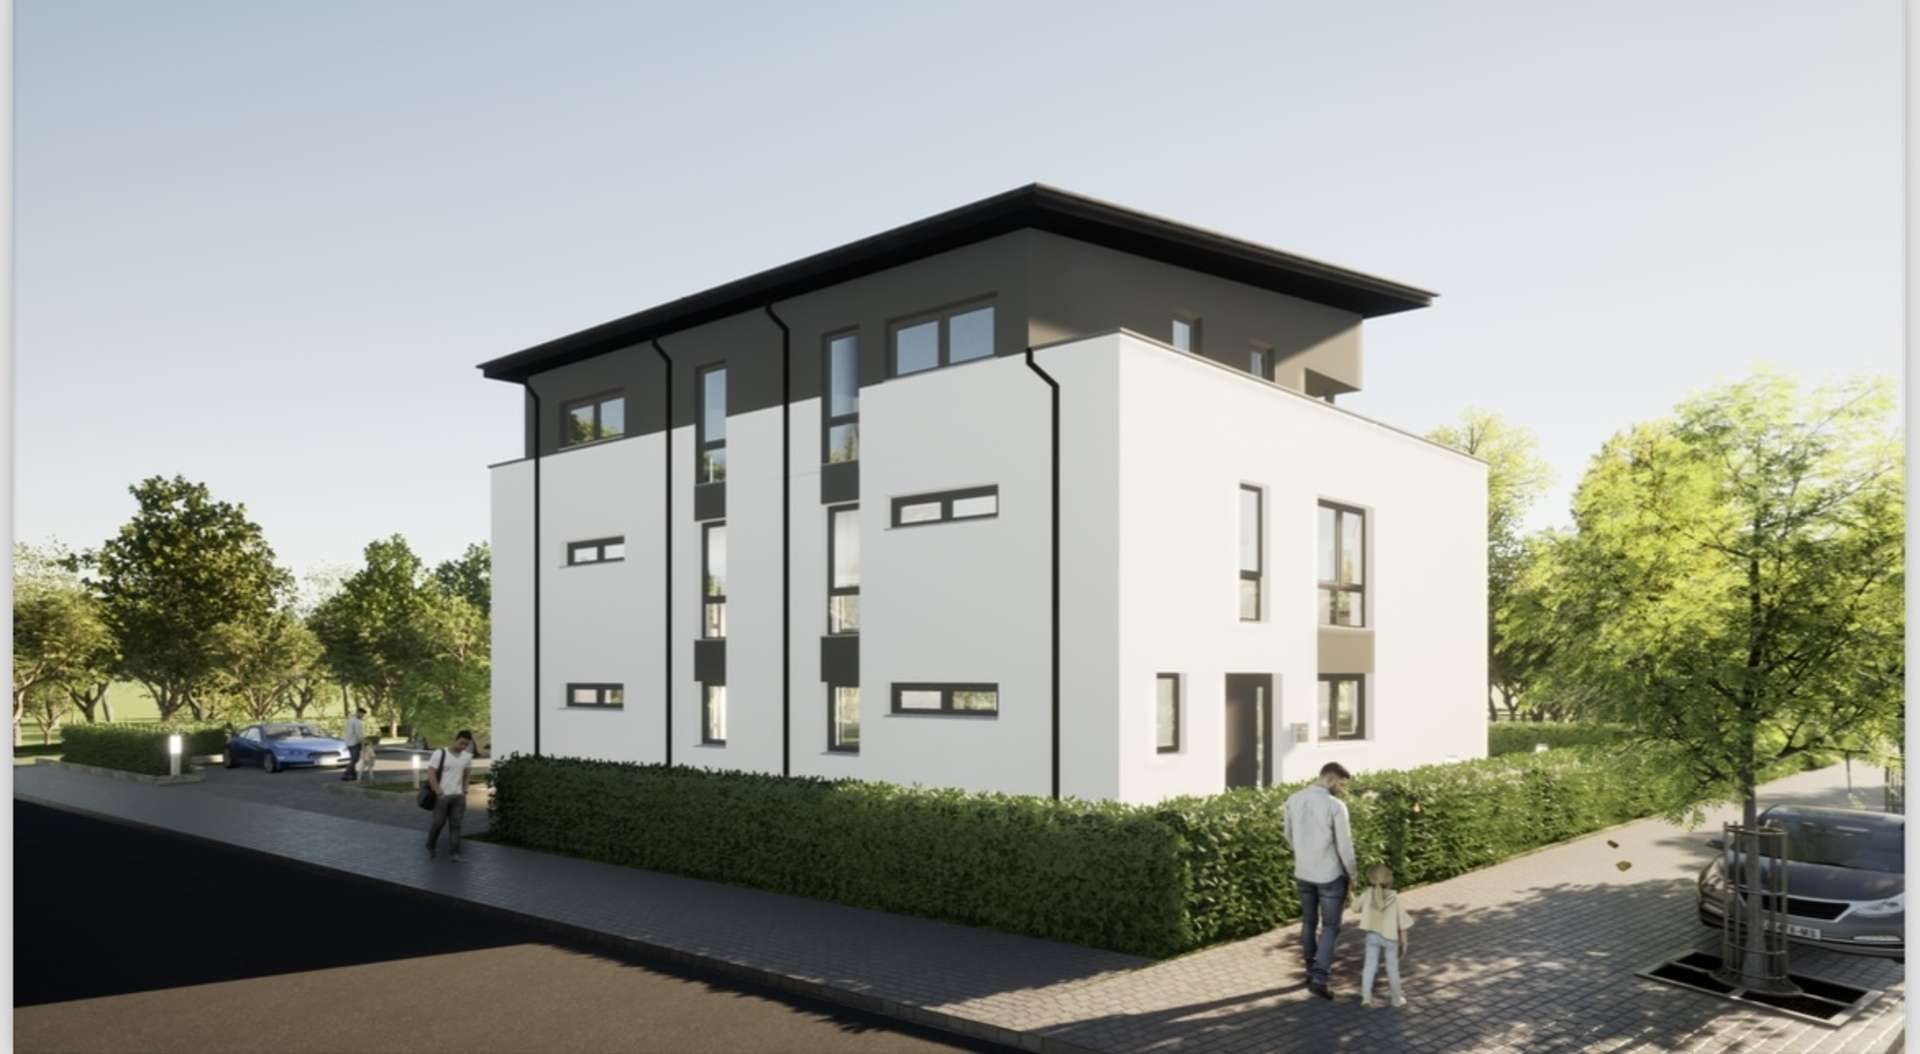 Haus zum Mieten in Bünde 1.756,10 € 170 m²